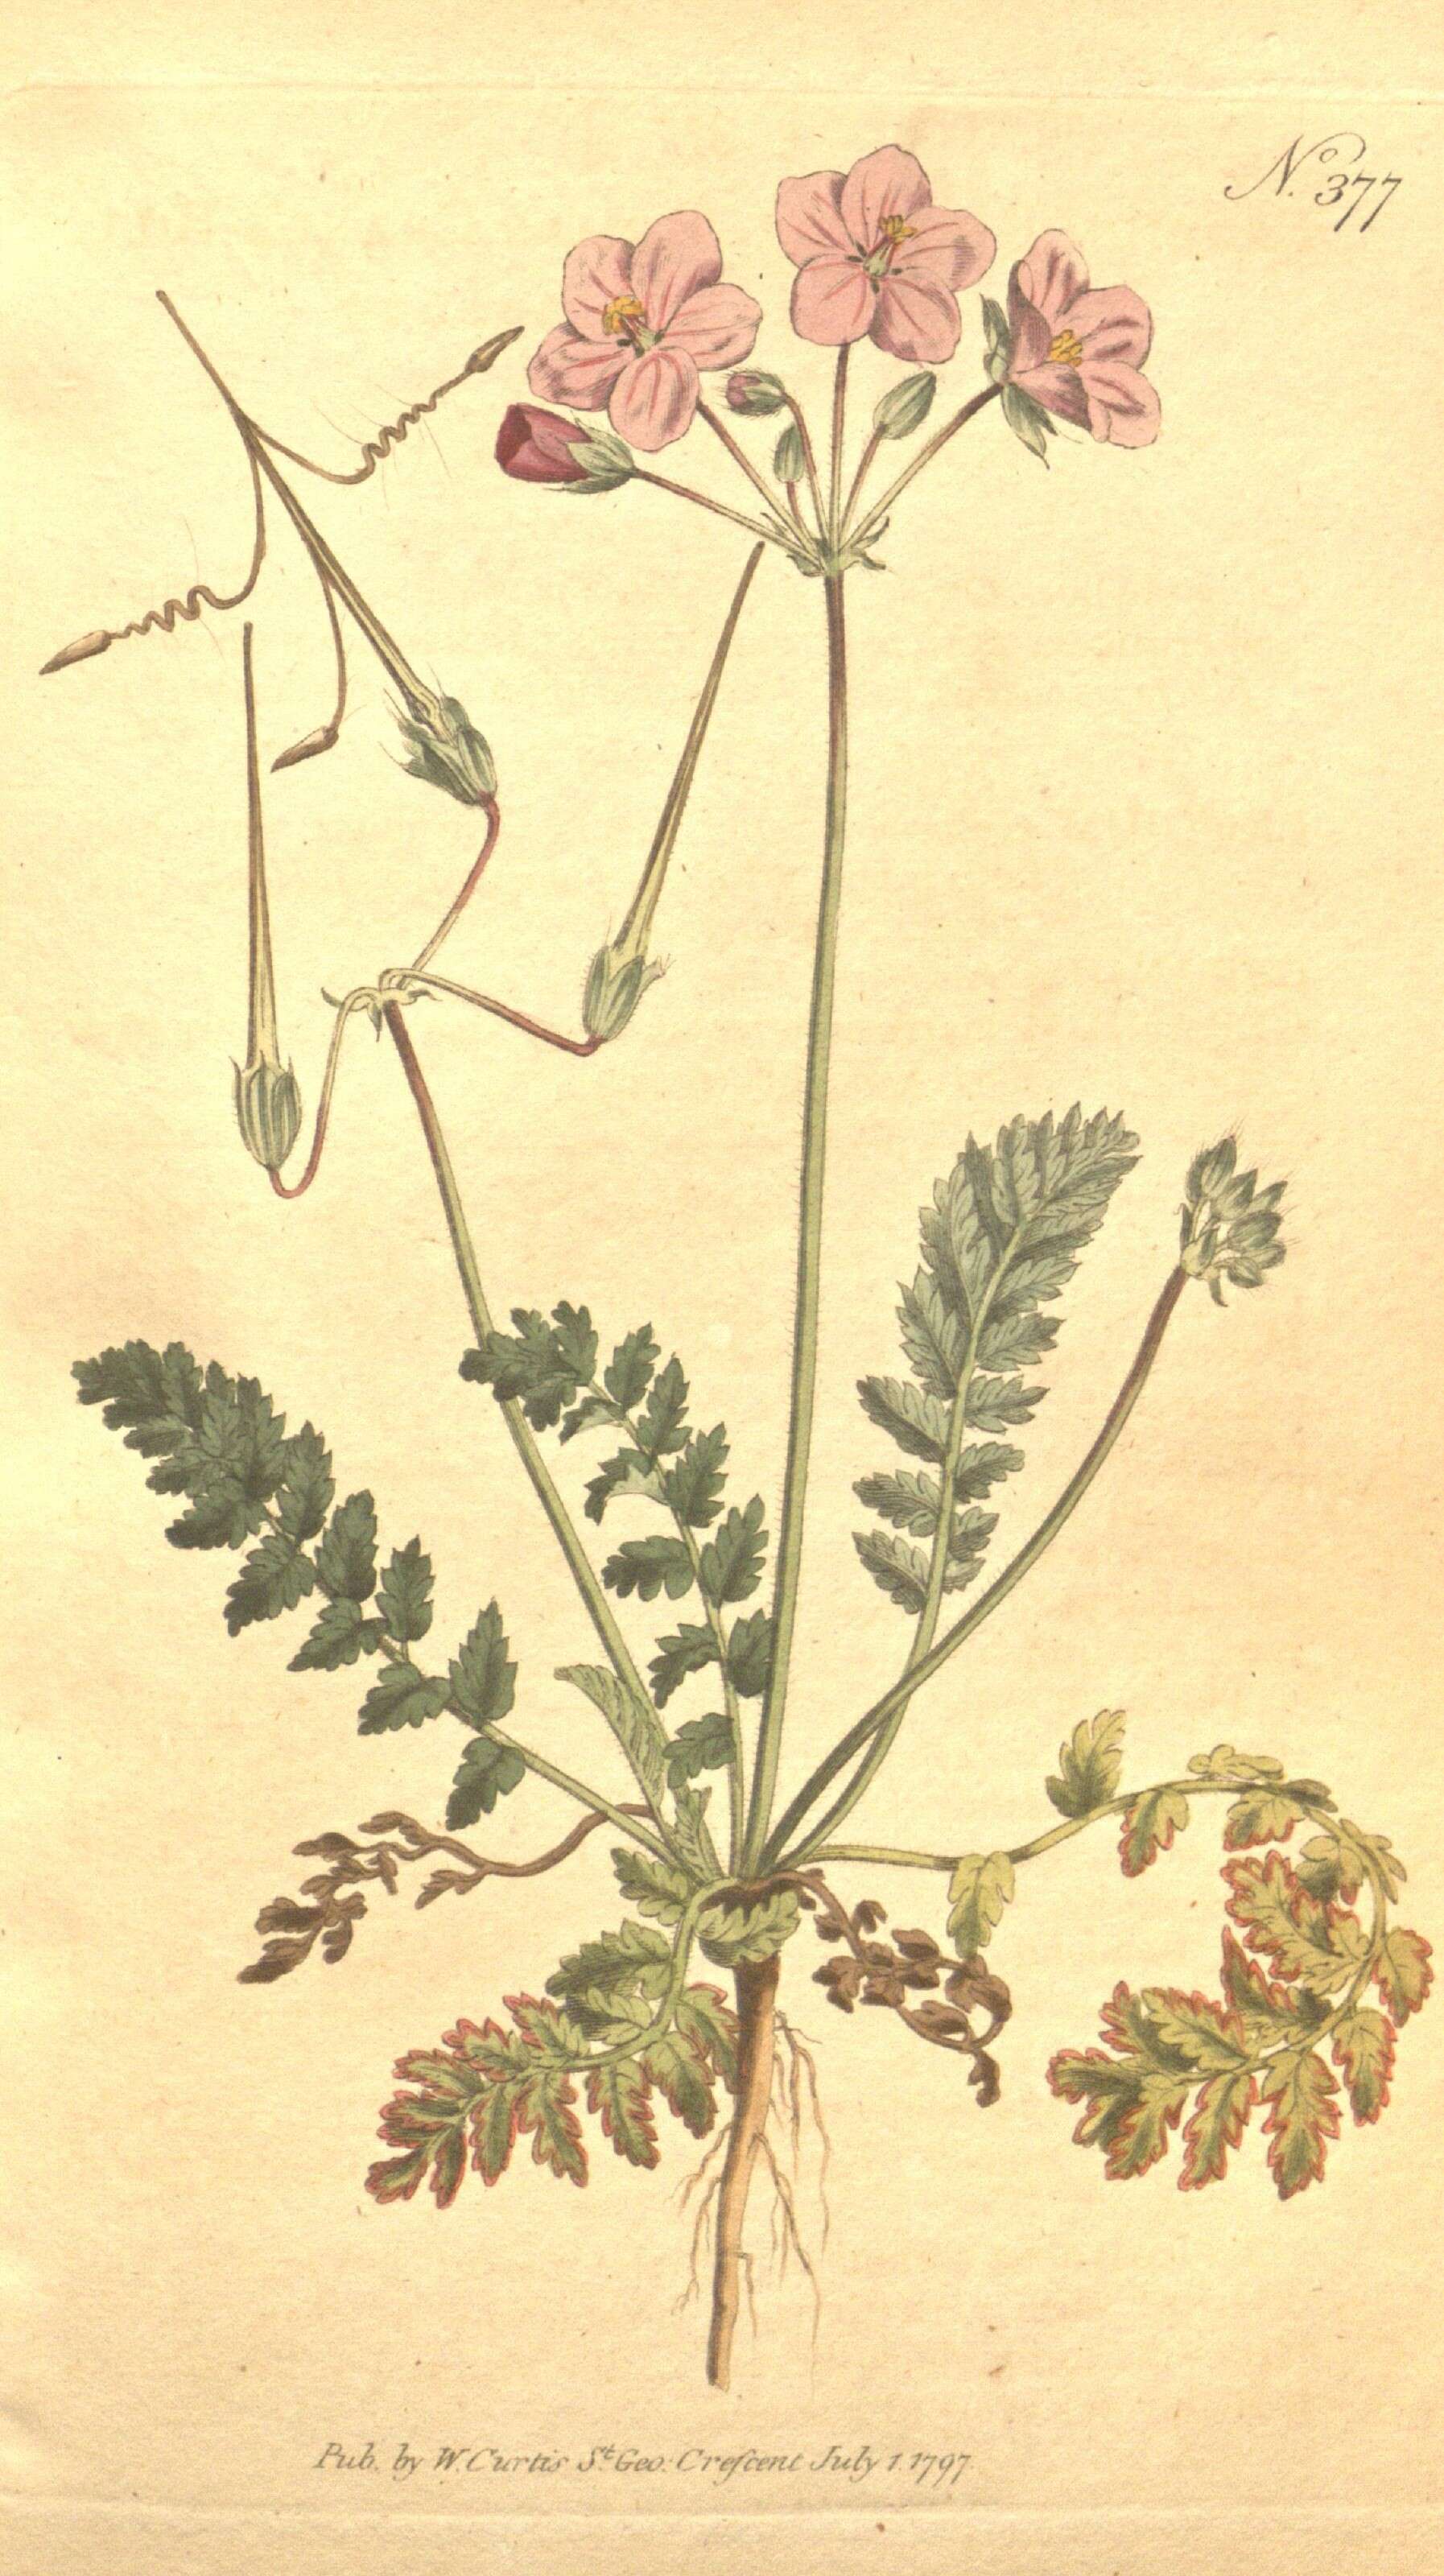 Sivun Erodium acaule (L.) Becherer & Thell. kuva